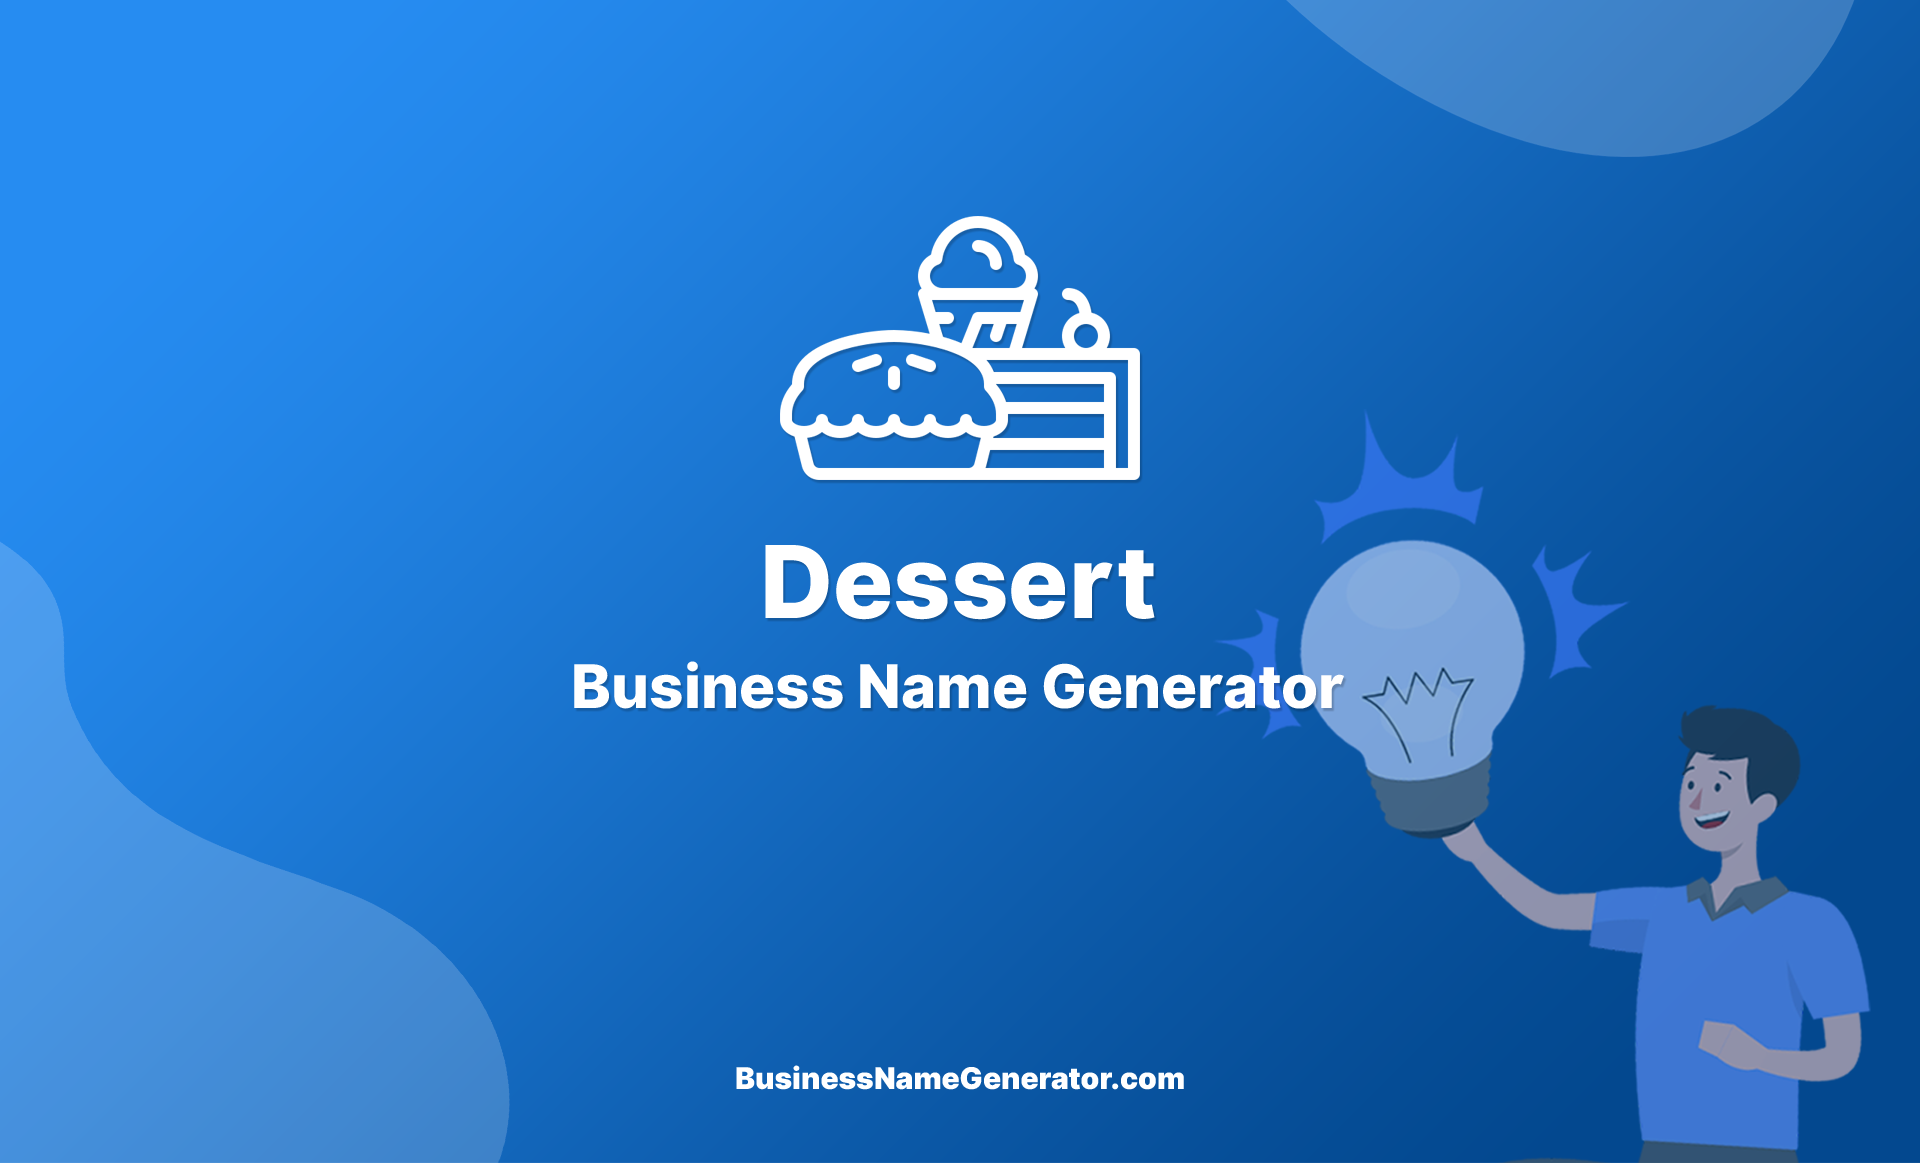 Dessert Business Name Generator